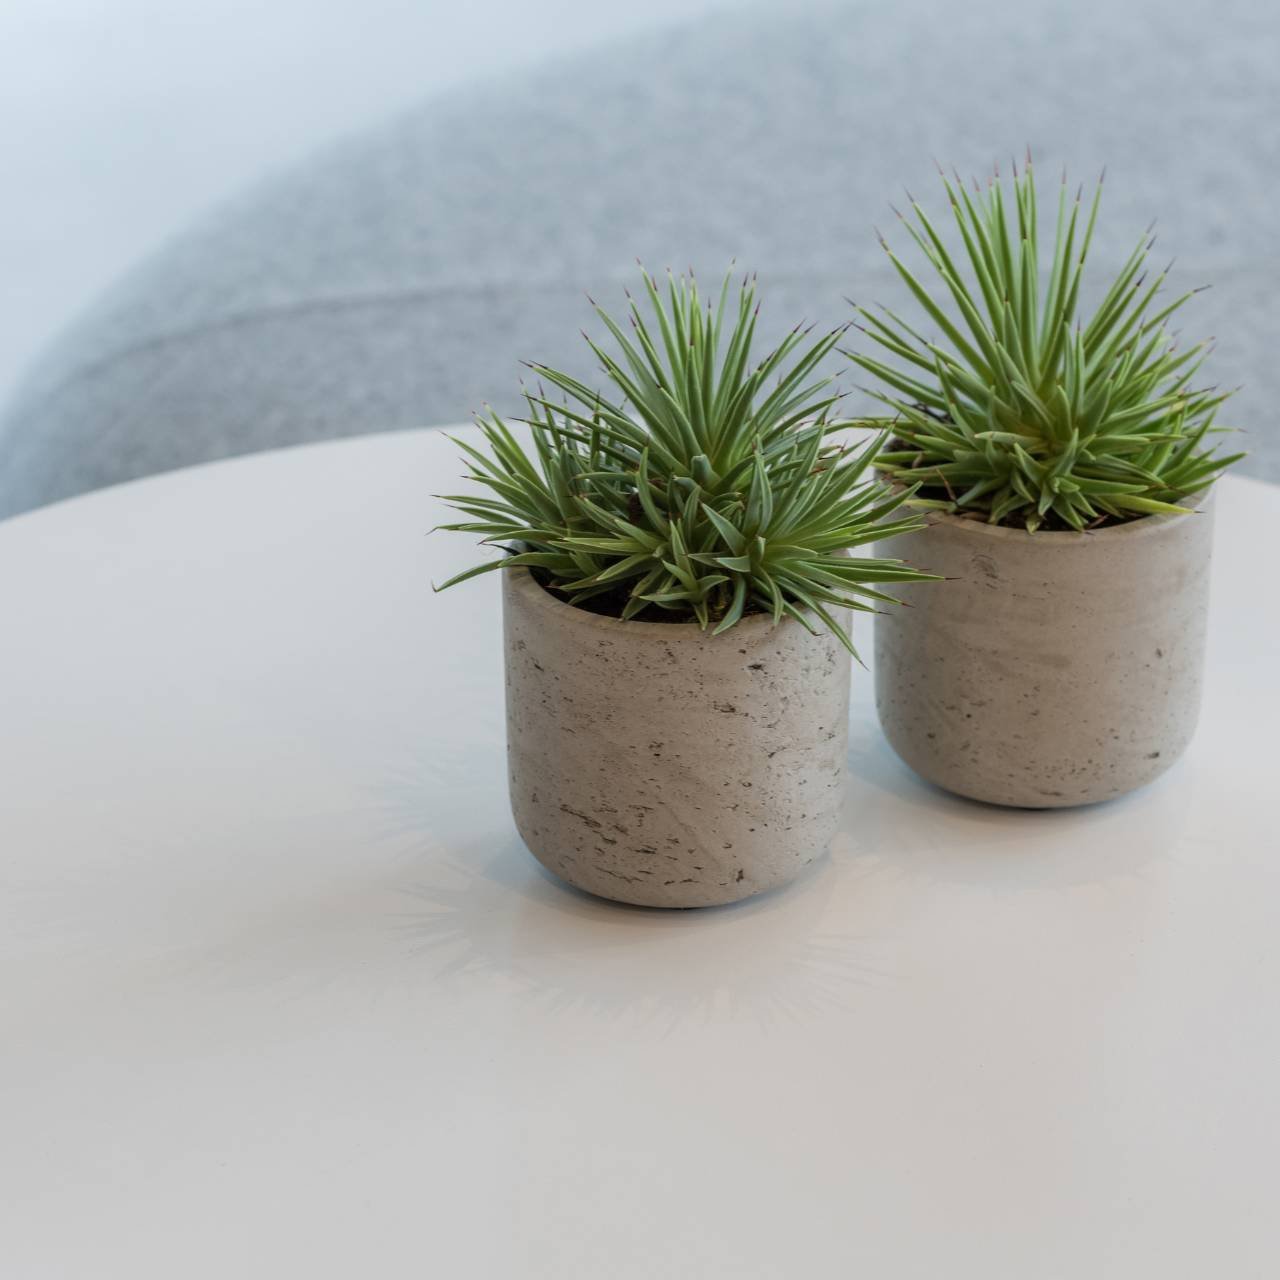 Fiberclay flower pot gray (W/H/D) 12x12x12cm